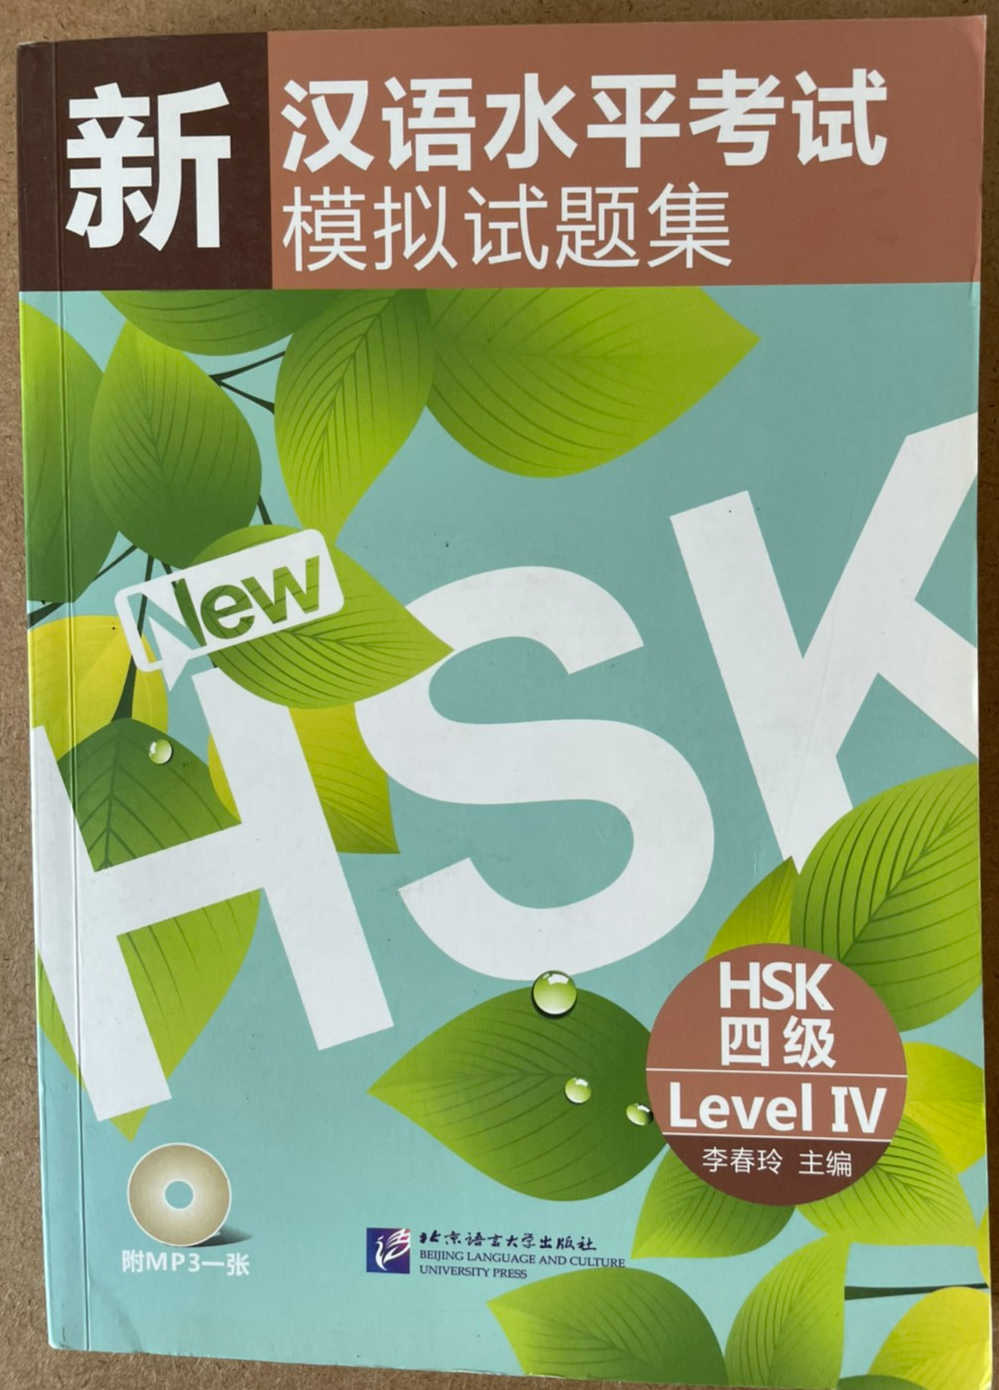 HSK4 คู่มือเตรียมสอบ HSK ระดับ 4 新汉语水平考试模拟试题集 10套 +CD